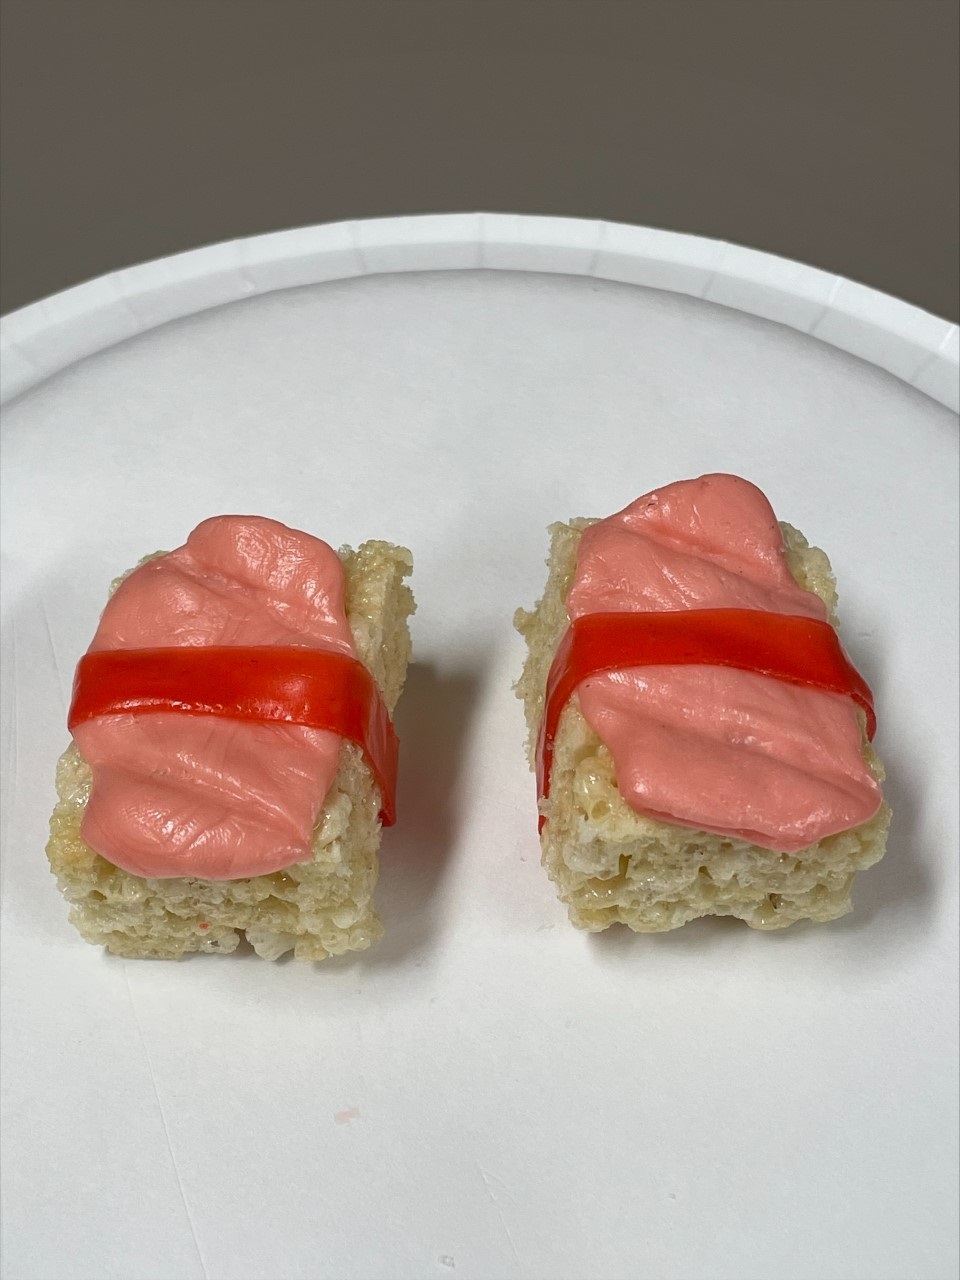 Candy Sushi